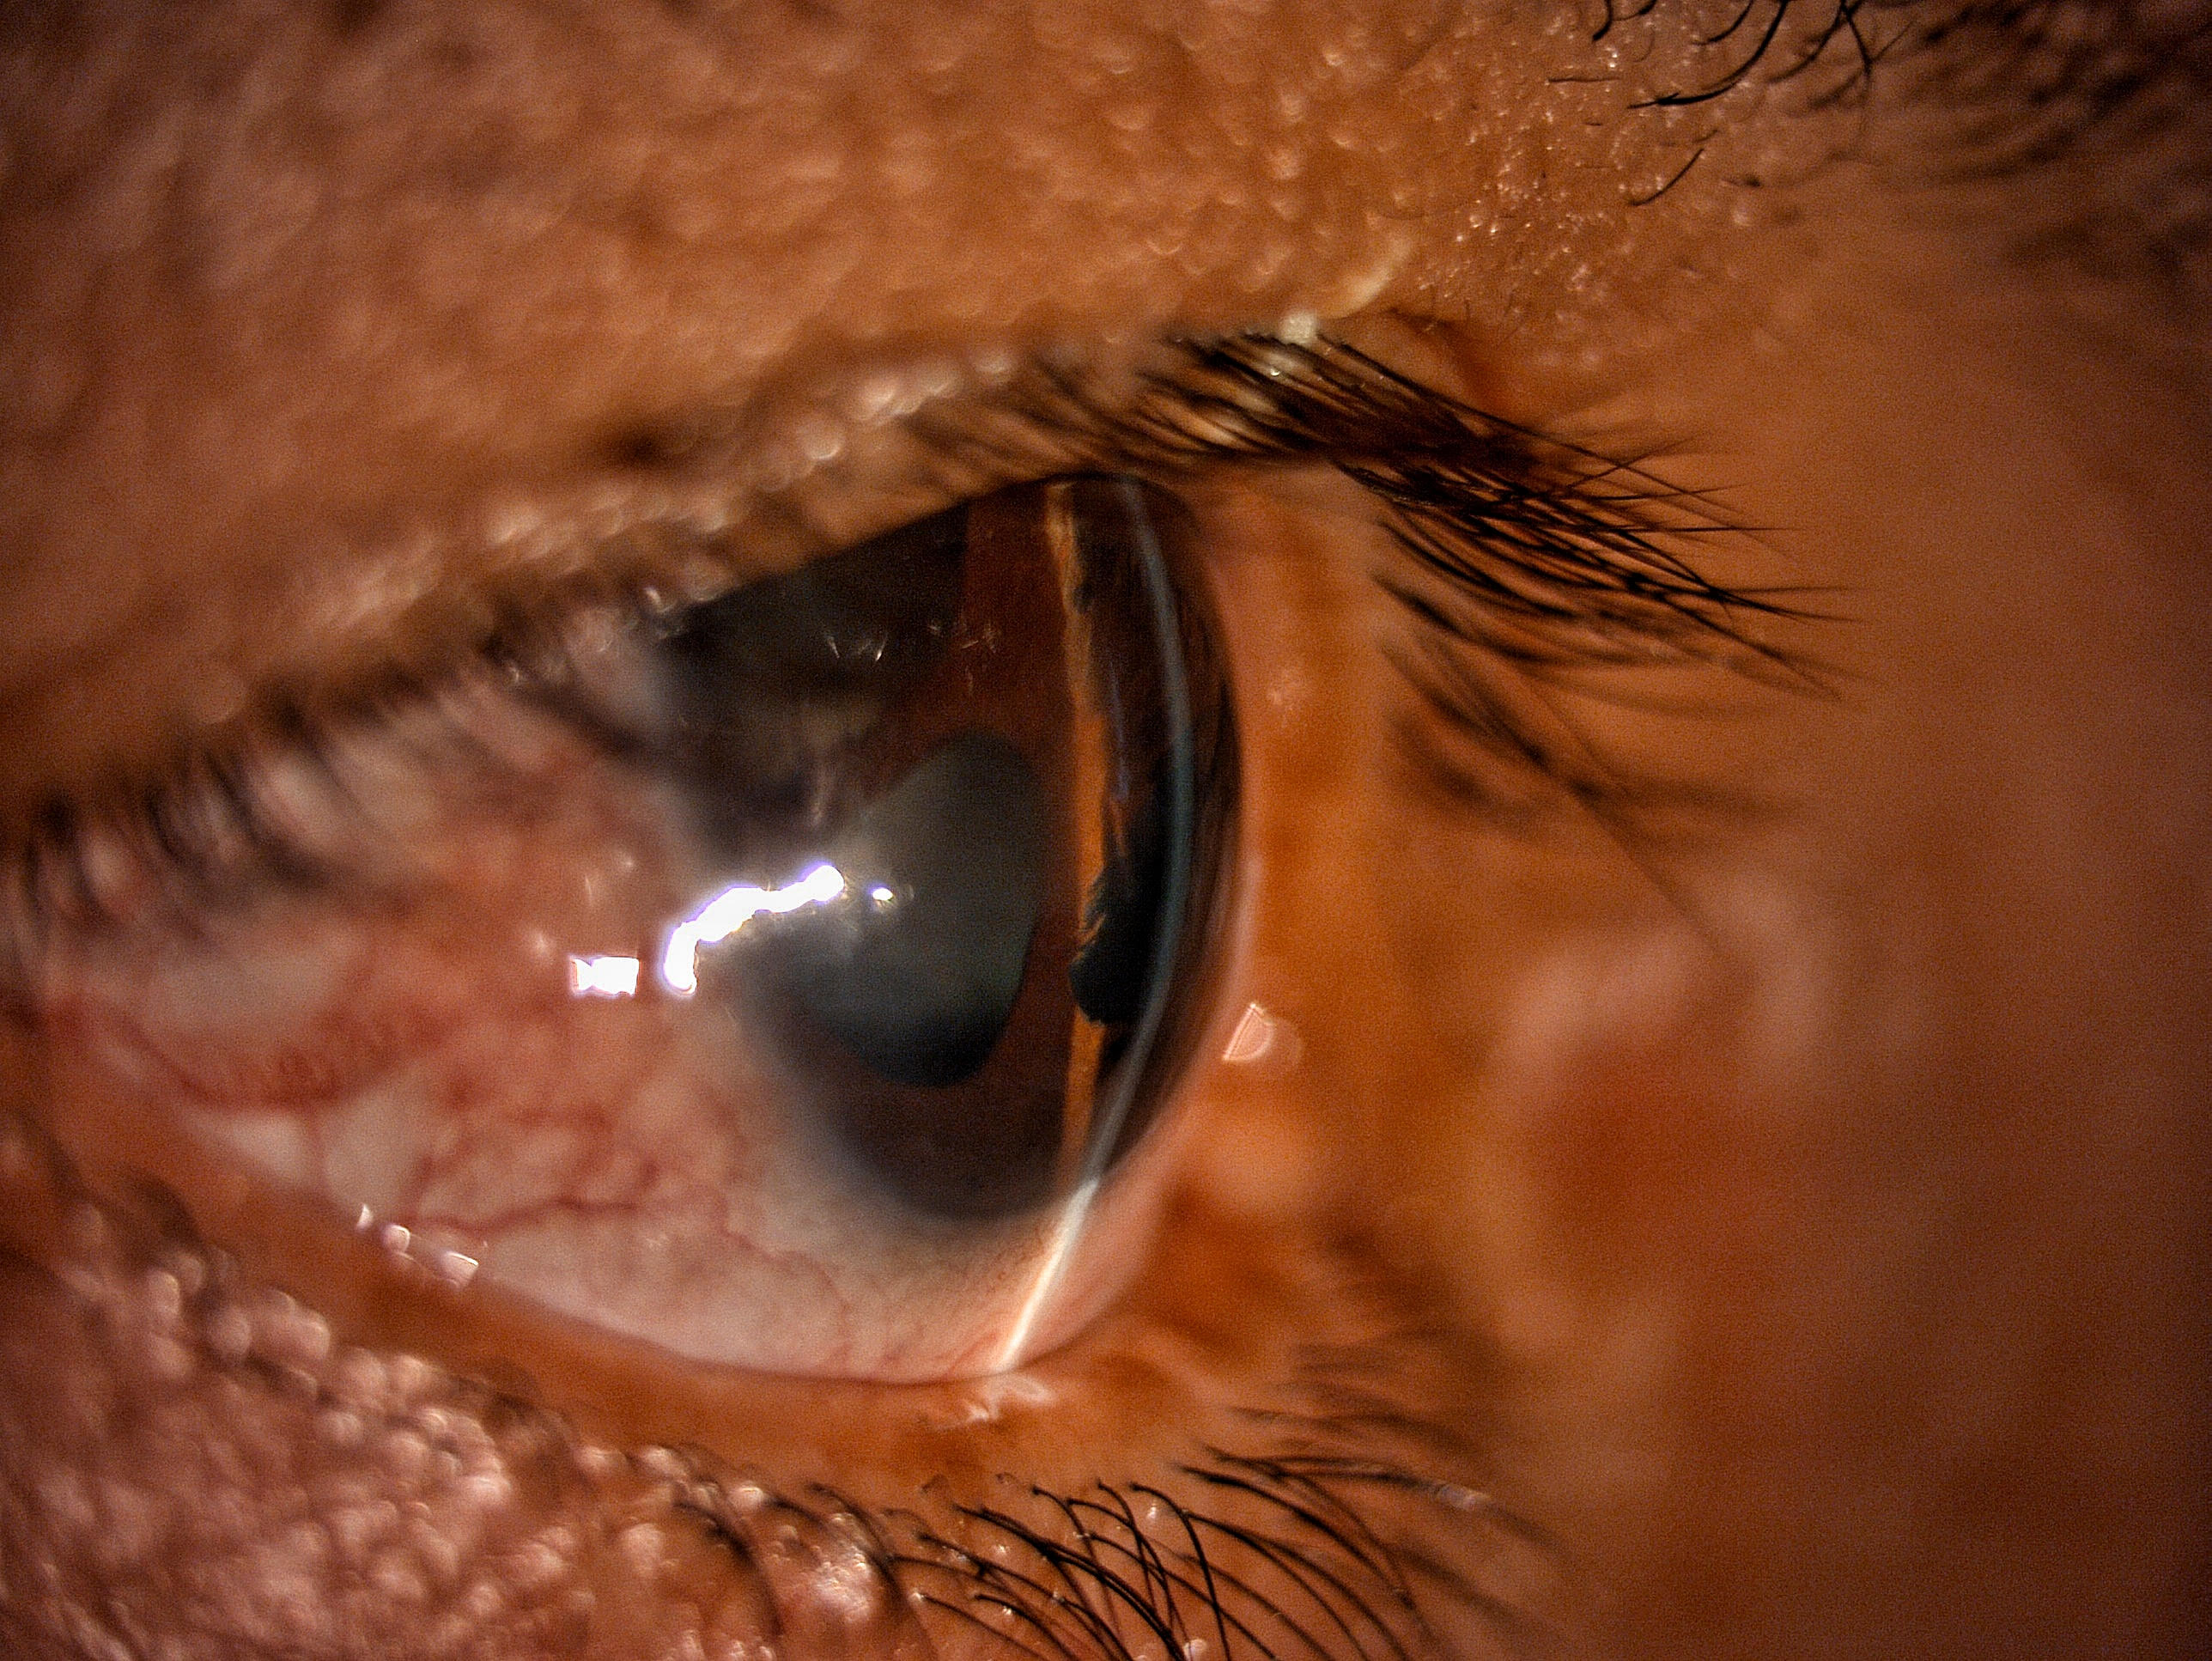 Iridocorneal Endothelial Syndrome: Secondary Angle-Closure Glaucoma